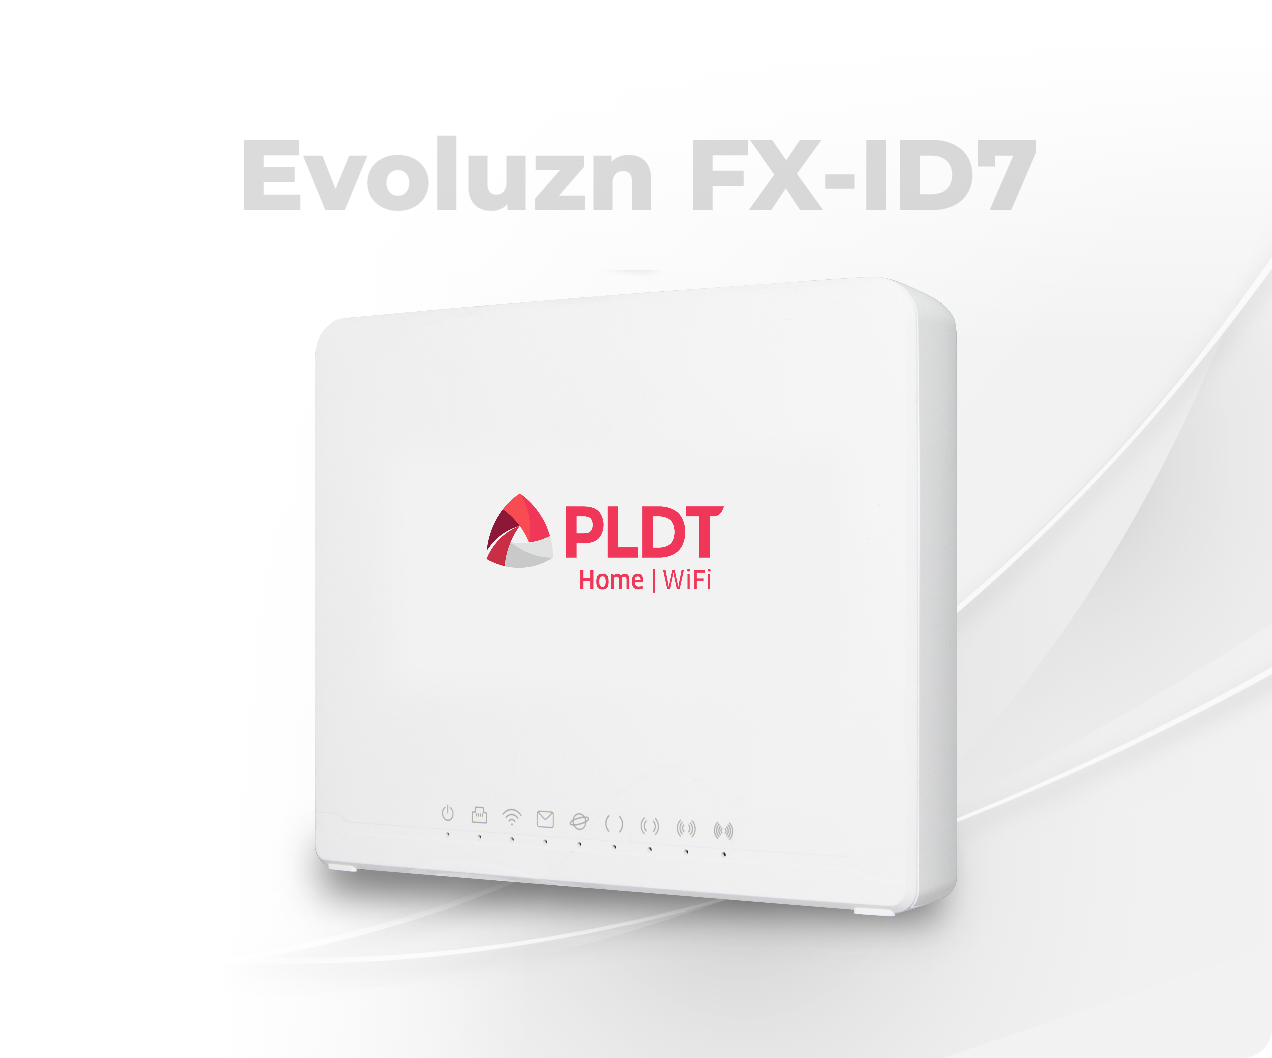 Evoluzn FX-ID7@2x(1)